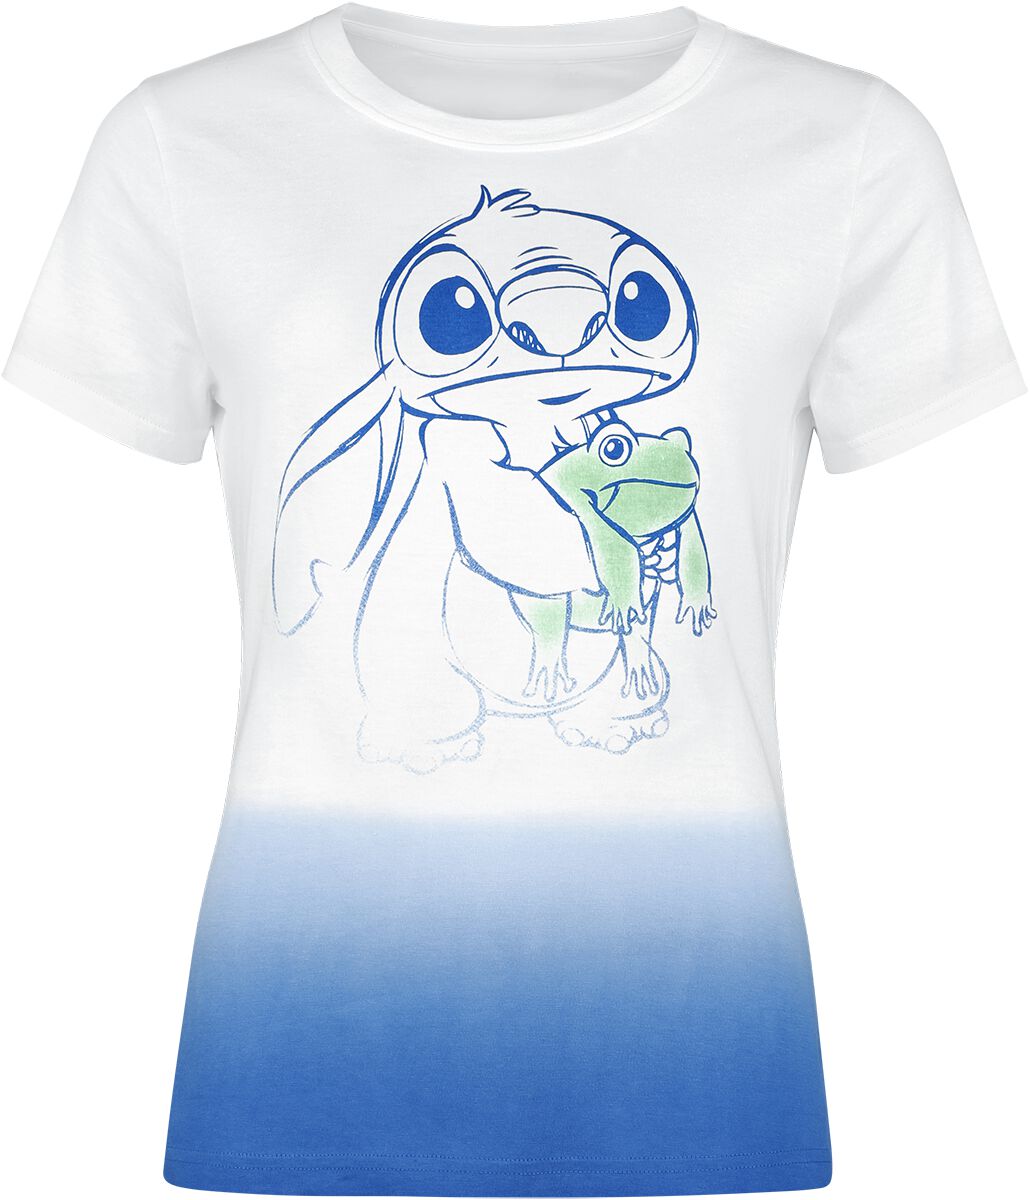 Lilo & Stitch - Disney T-Shirt - Frog friend - S to XXL - for Women - multicolour